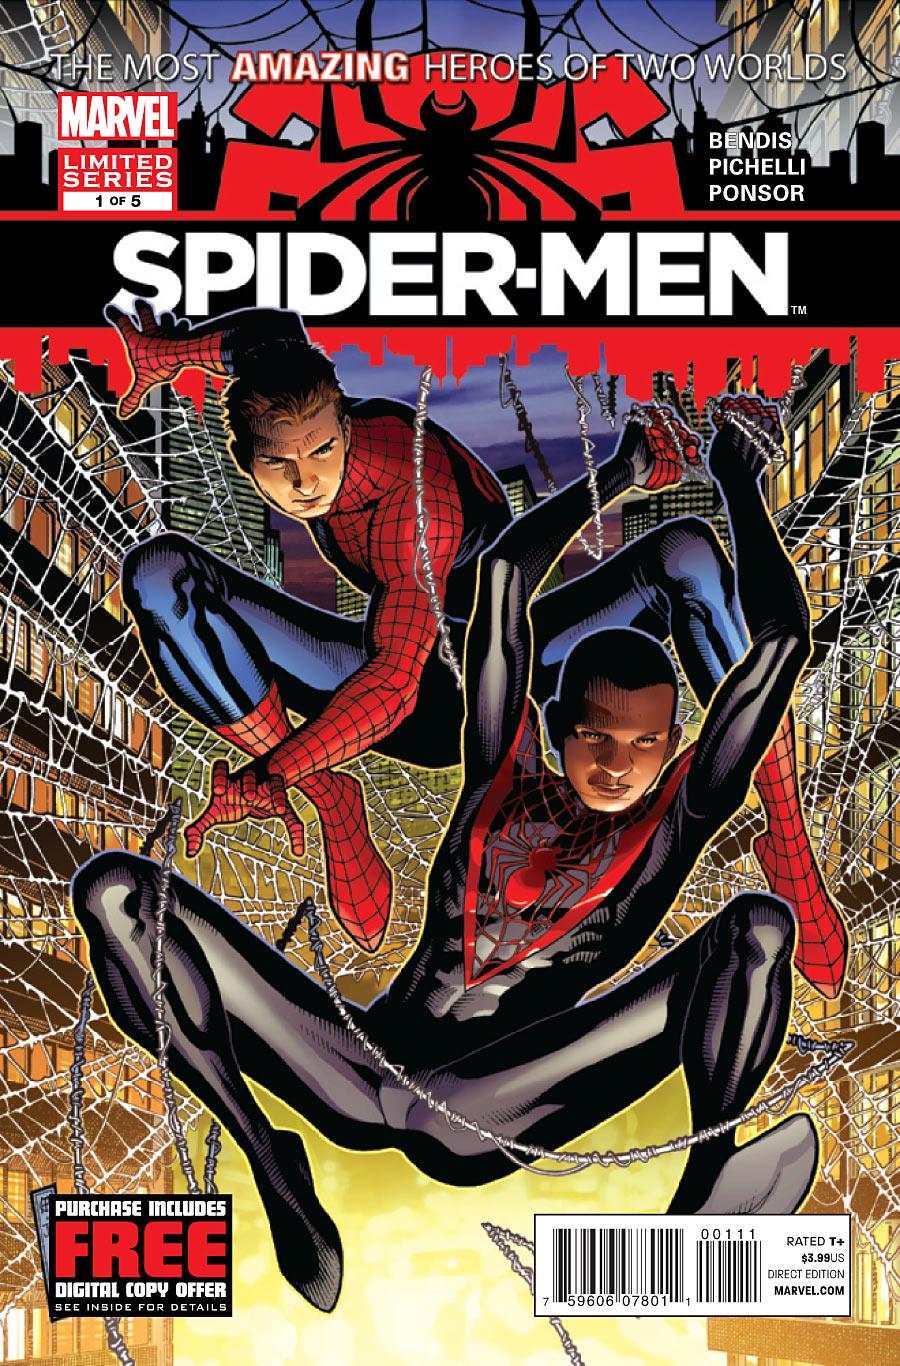 Spider-Men Vol. 1 #1